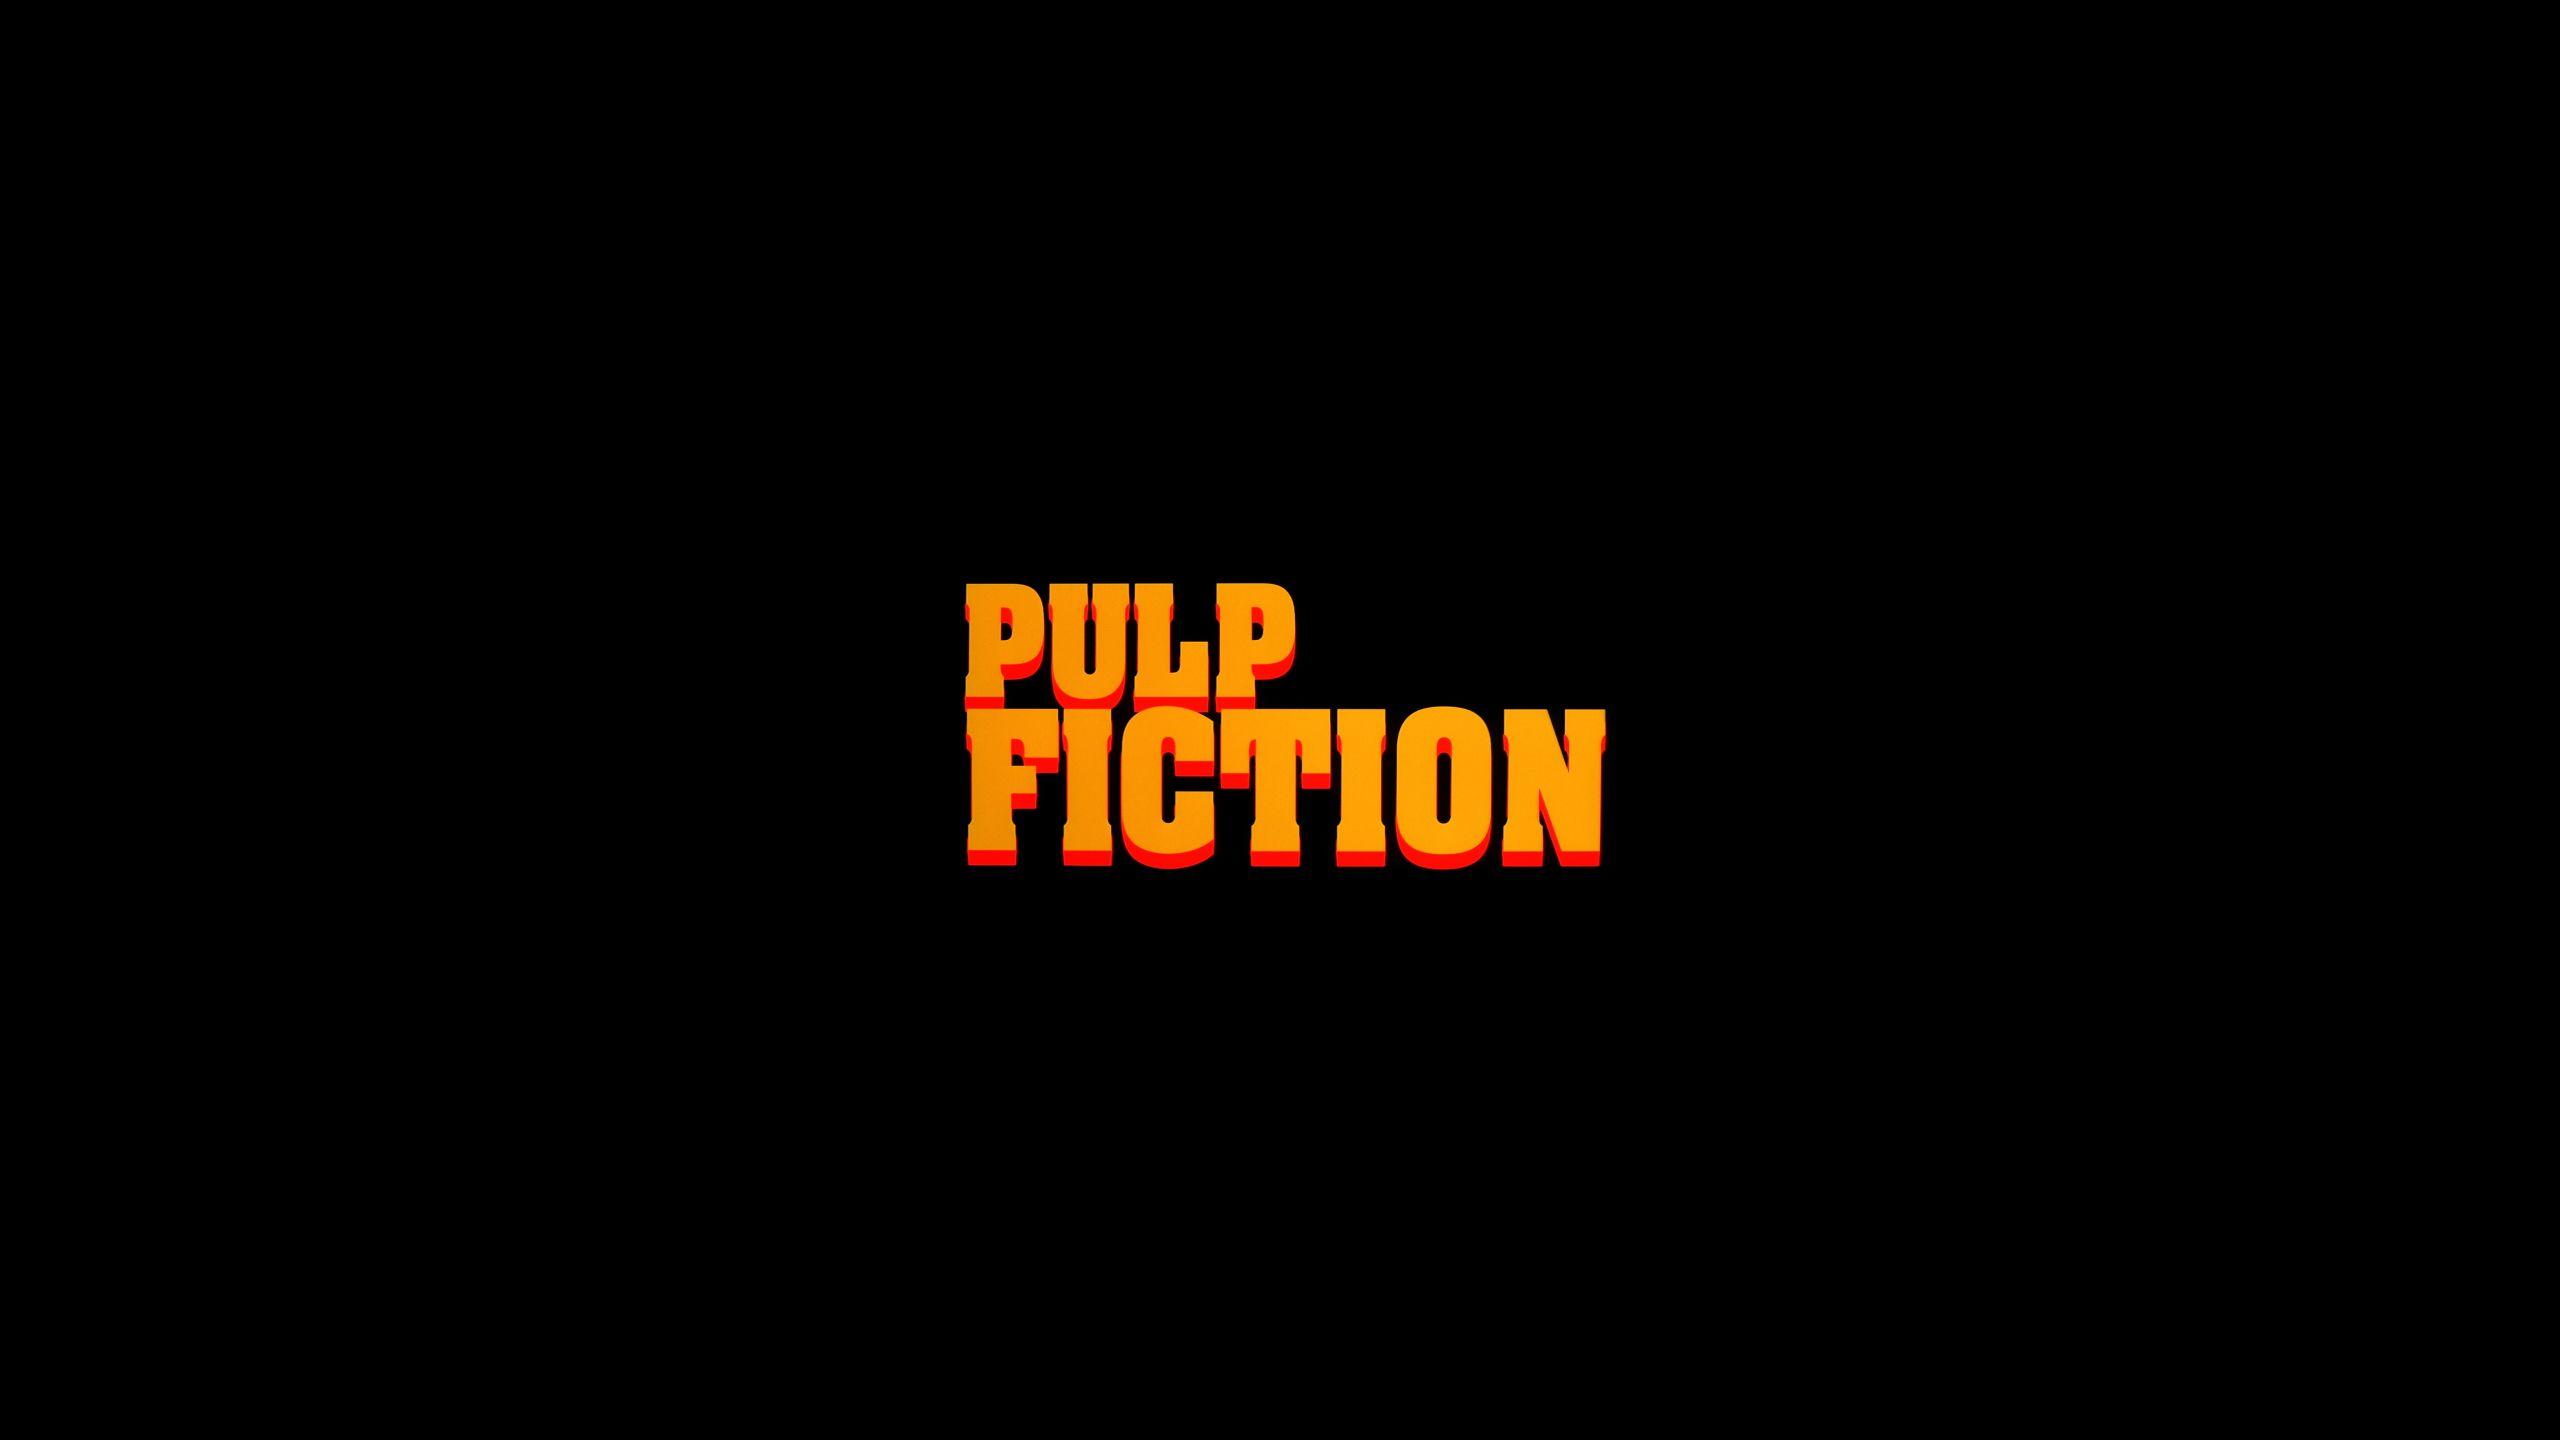 Pulp Fiction Computer Wallpaper, Desktop Background 2560x1440 Id